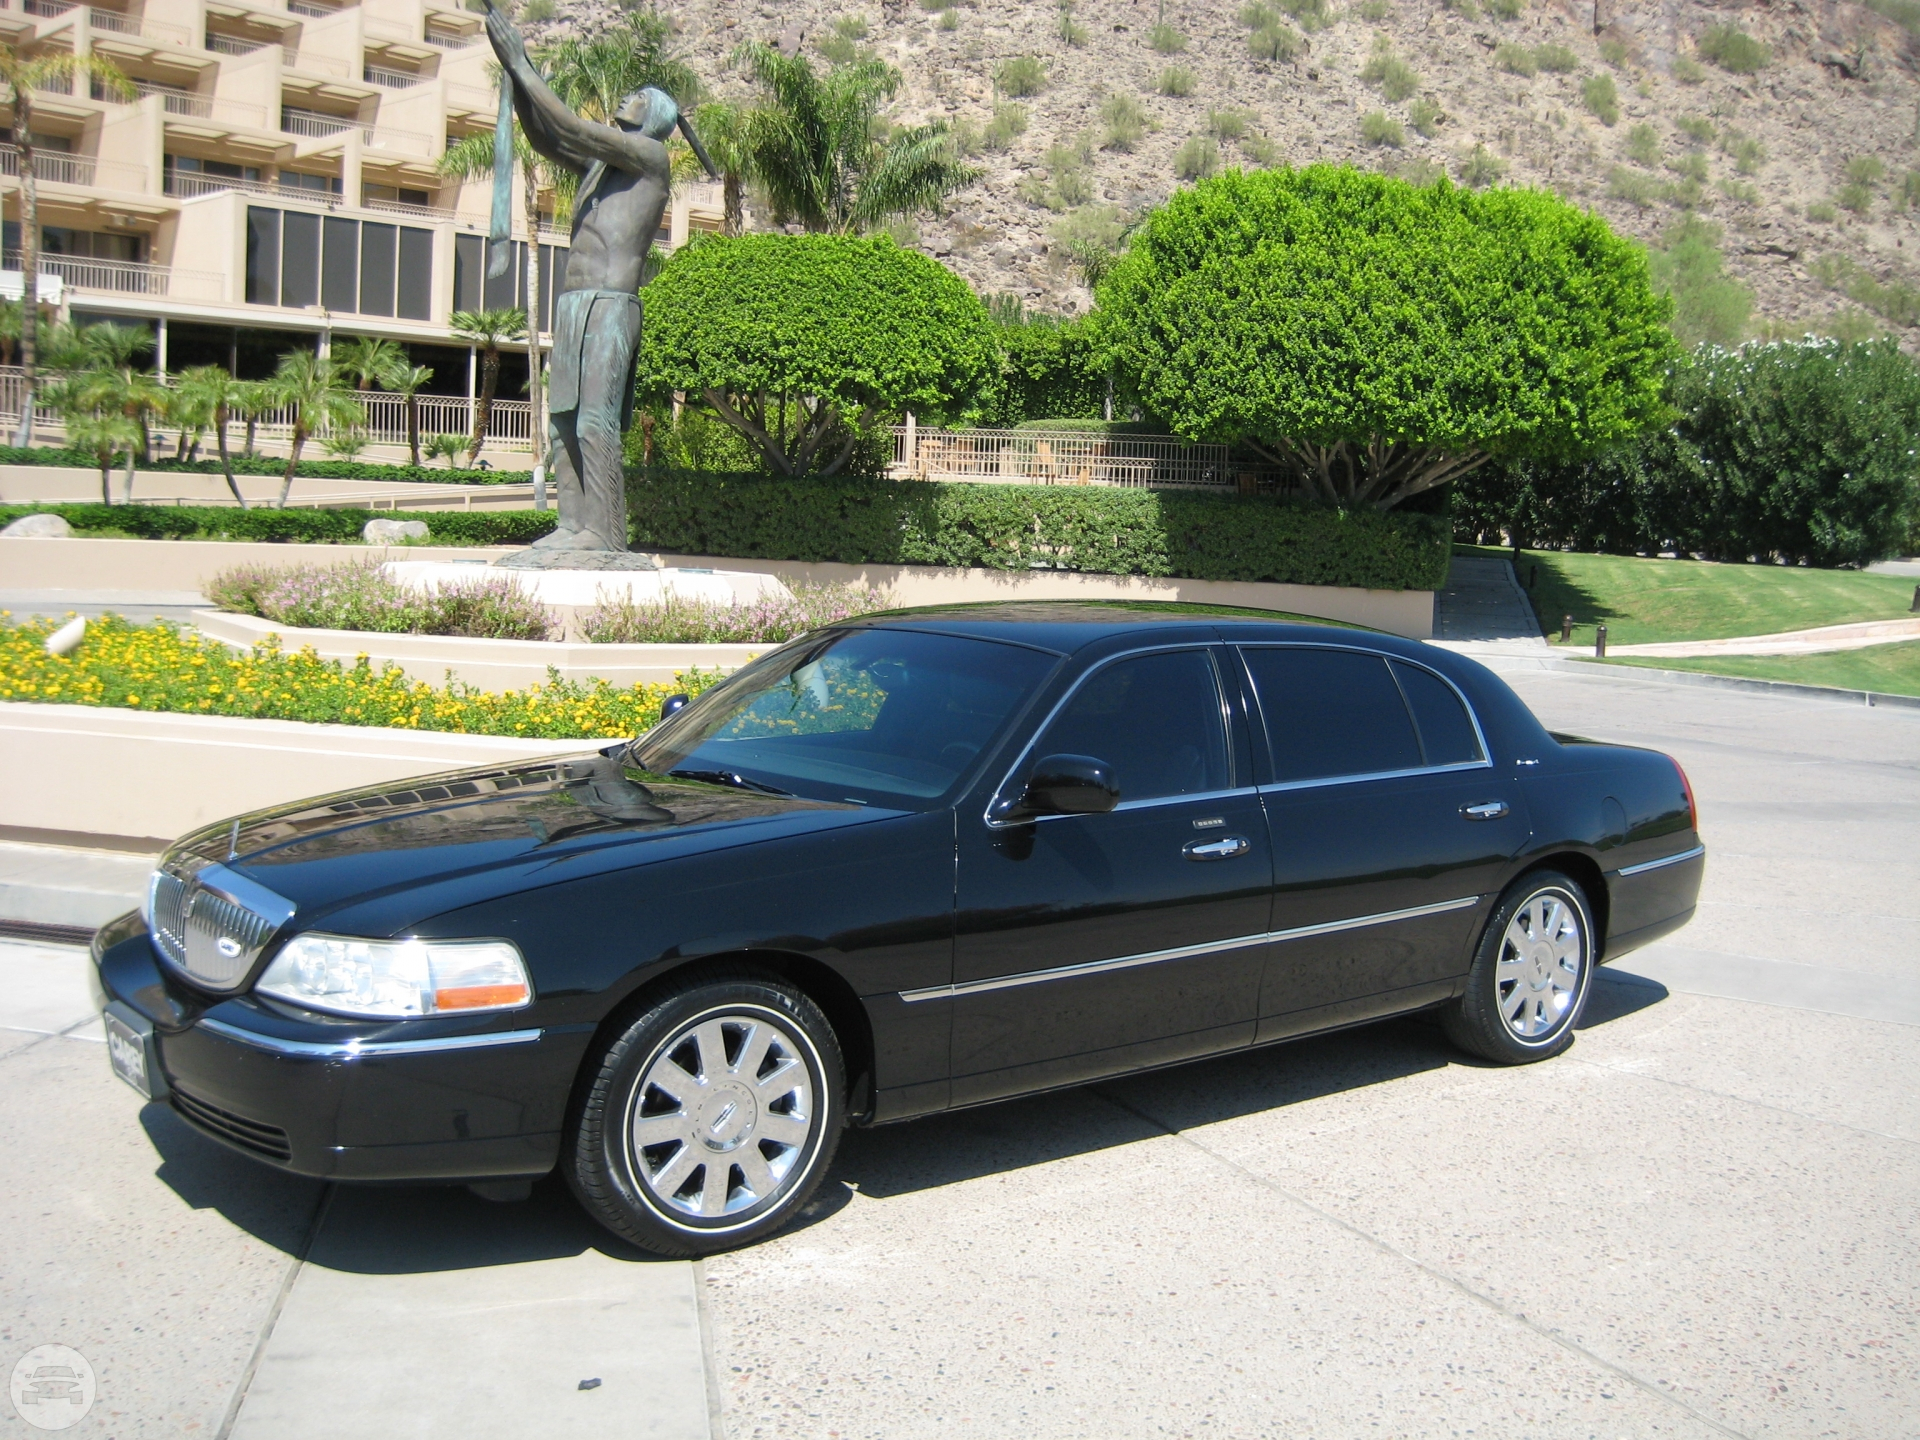 Lincoln Town Car Sedan
Sedan /
Phoenix, AZ

 / Hourly $0.00
